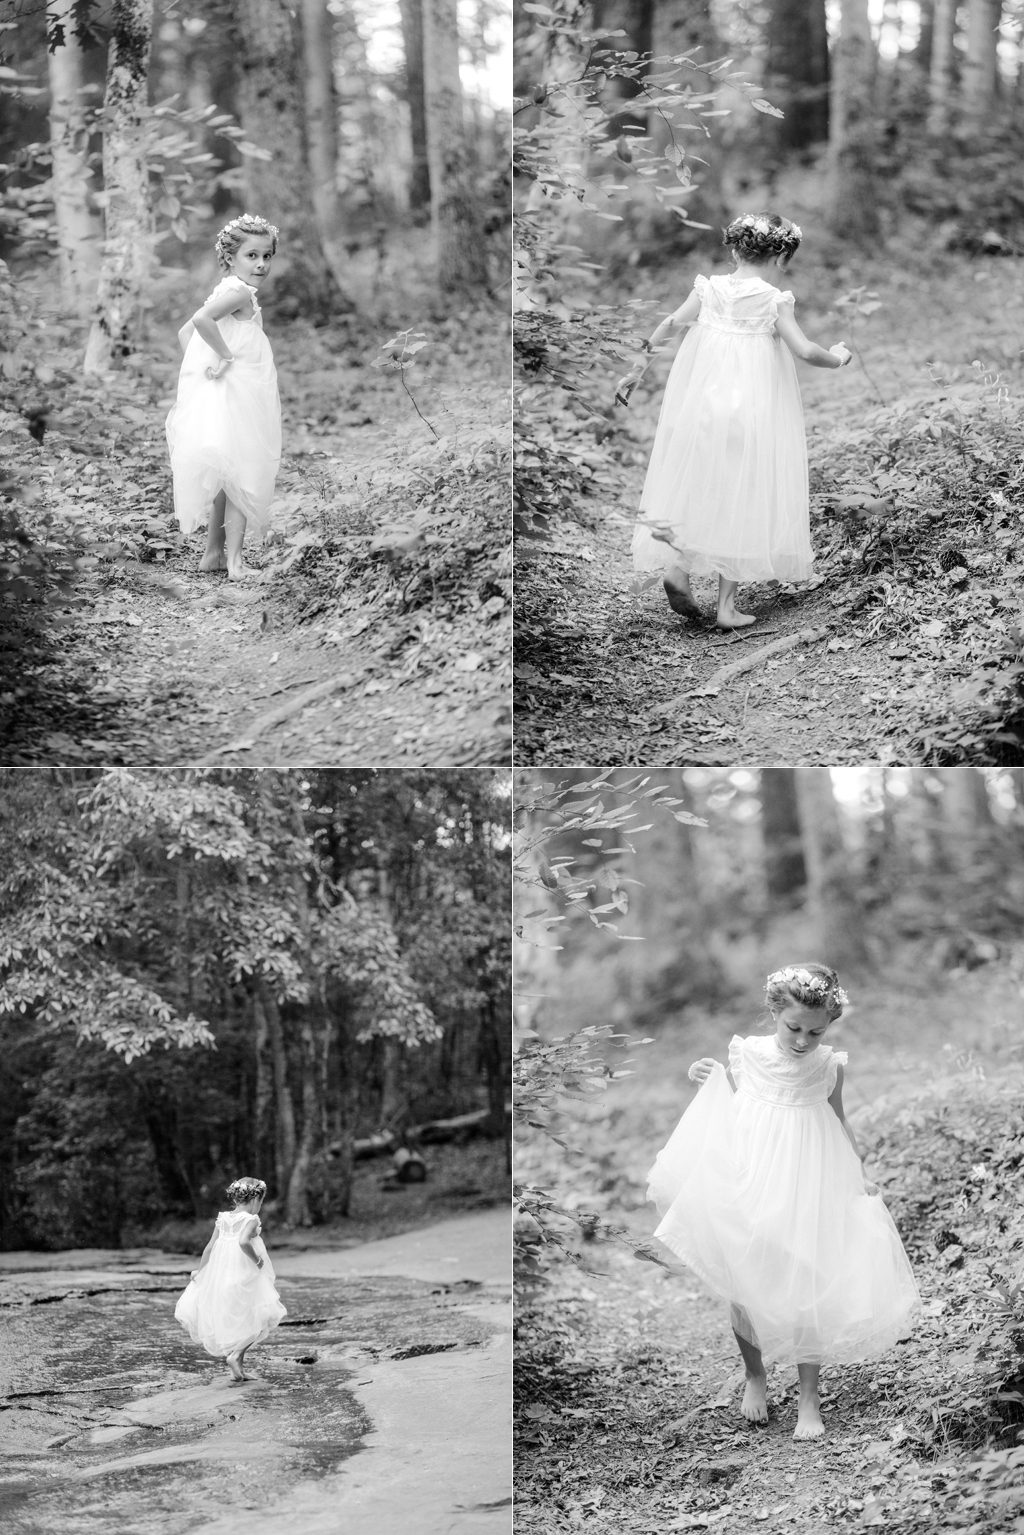 B&W portraits of a little girl in the woods of Watkinsville, GA.